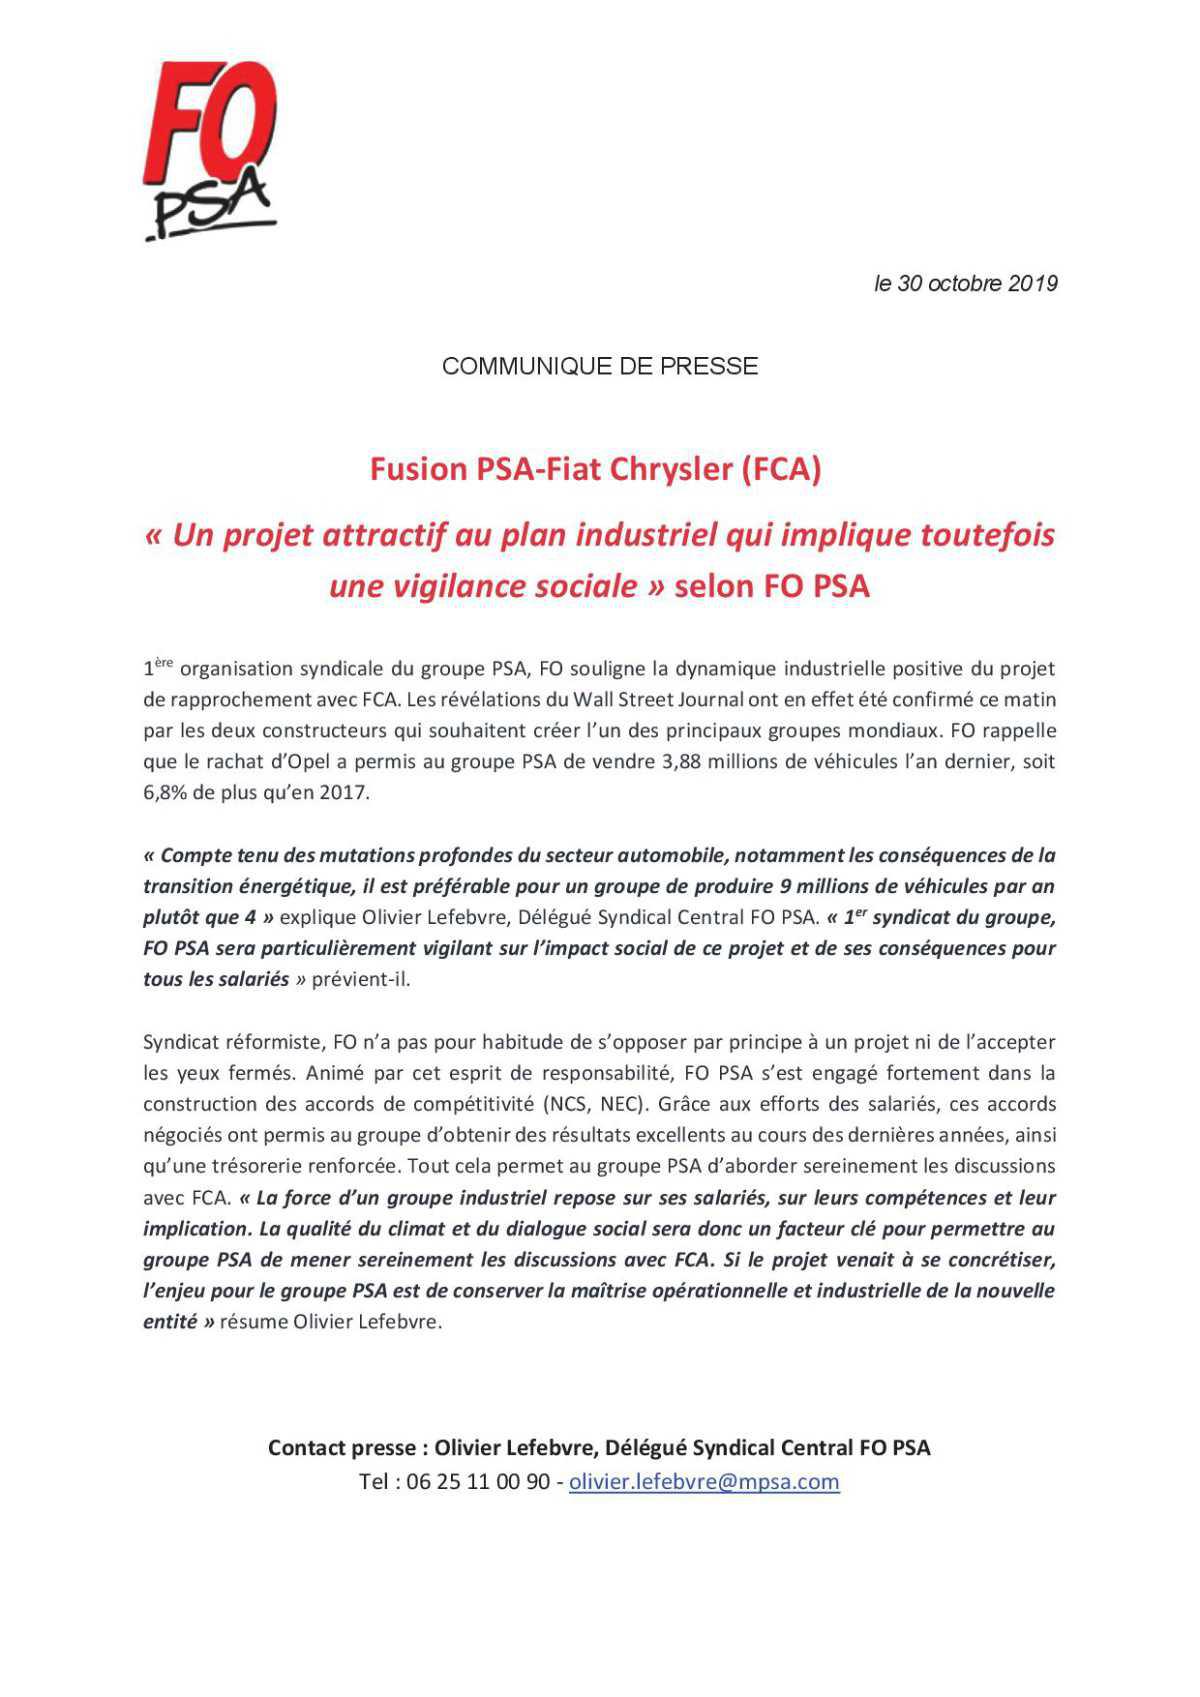 Fusion PSA /Groupe FCA ?